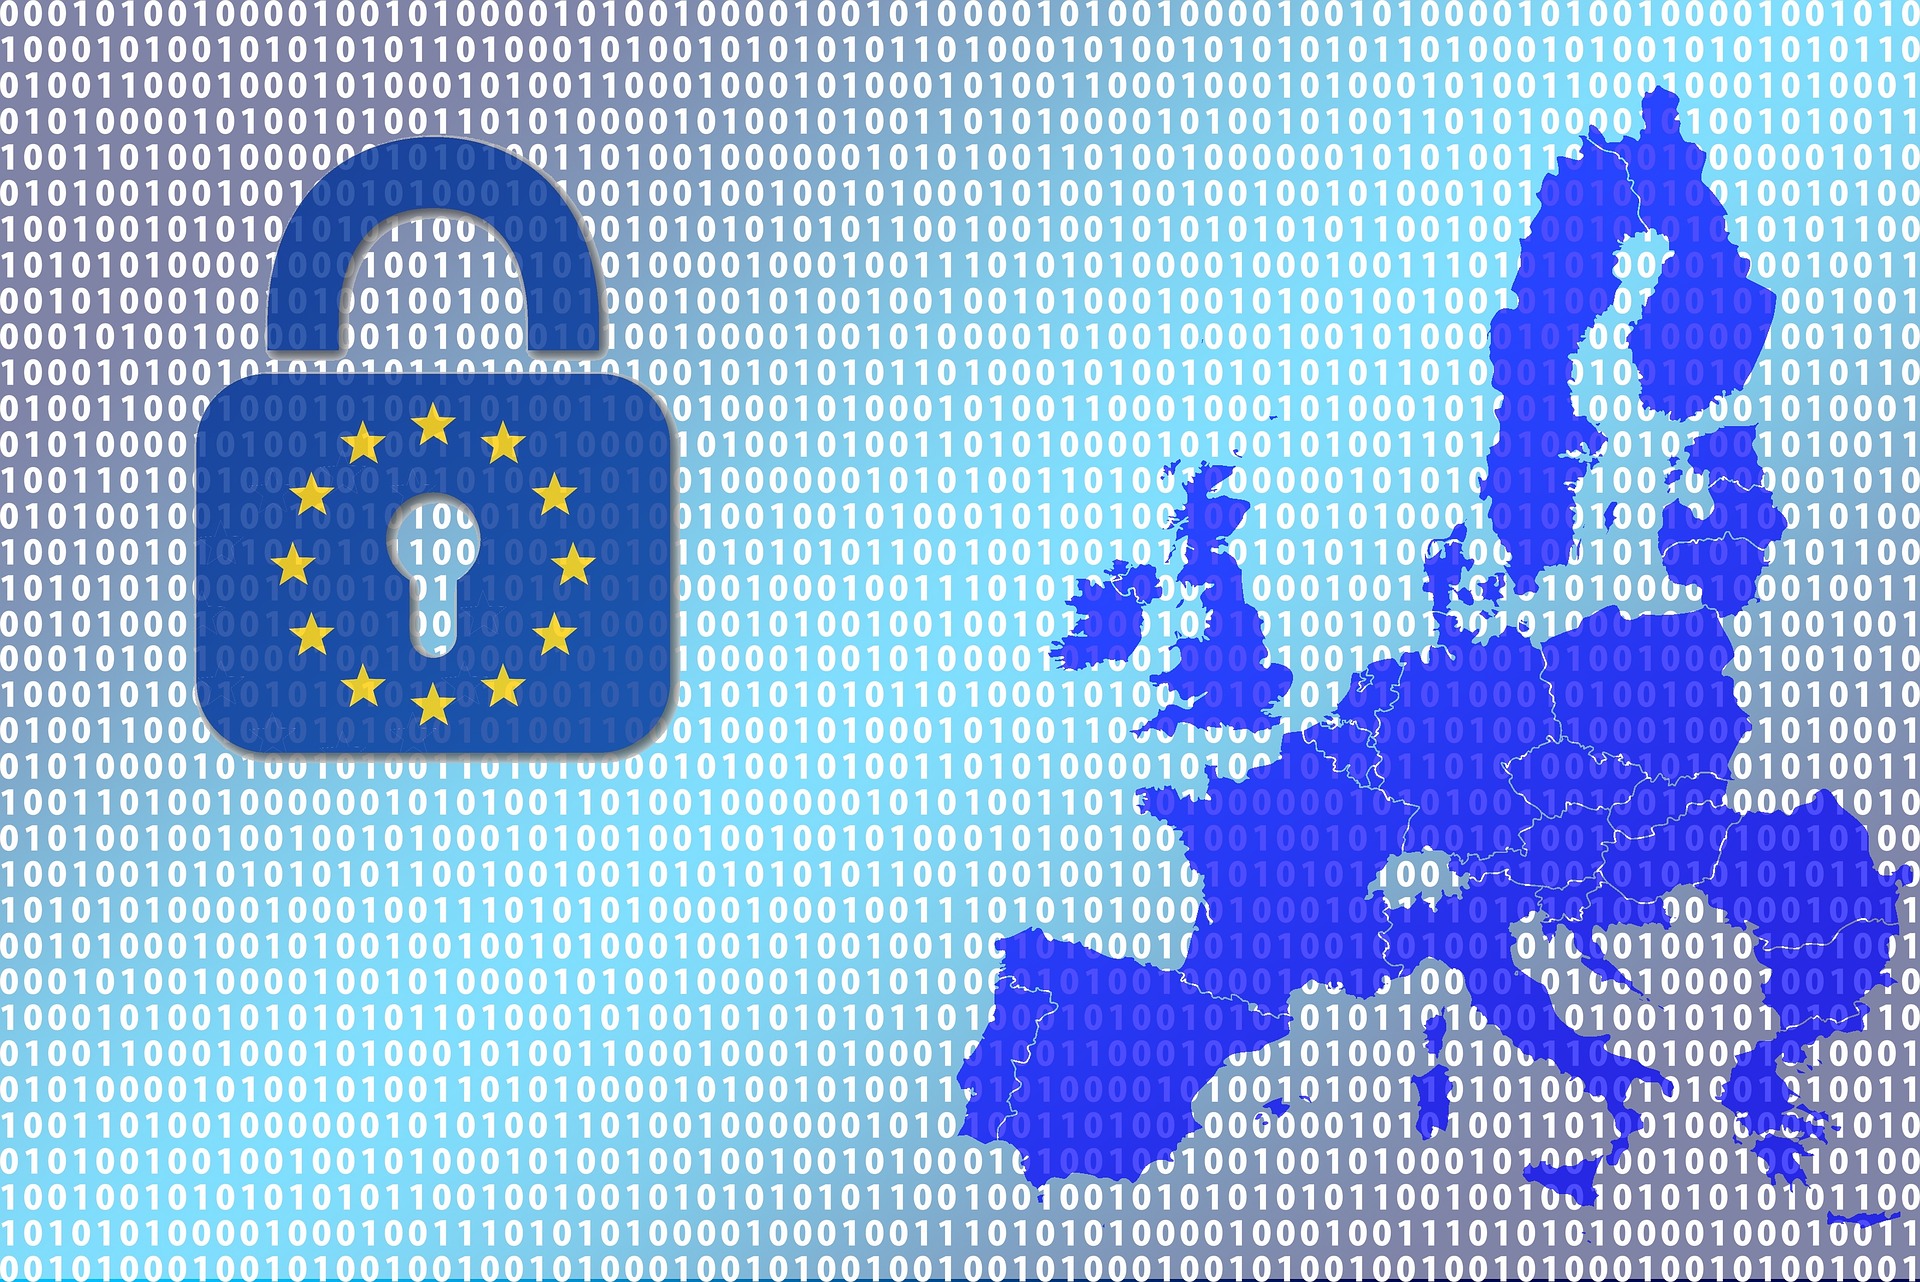 USA kommt der EU in Sachen Datenschutz entgegen - Bild 1